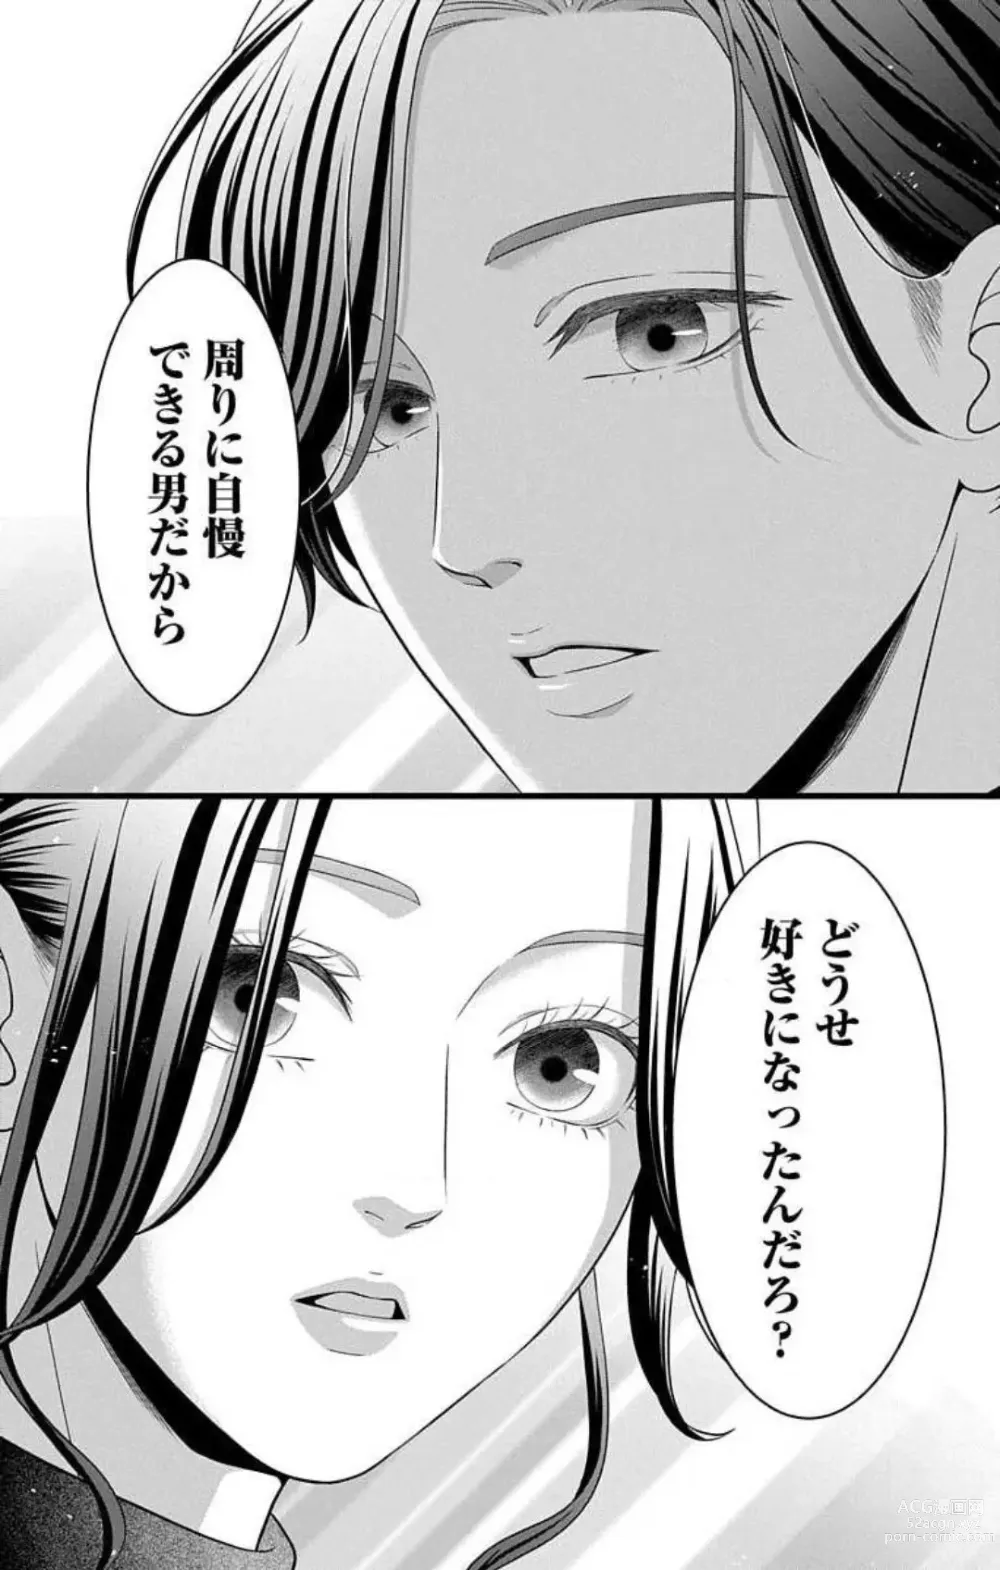 Page 271 of manga Mousou Shoujo 21-27